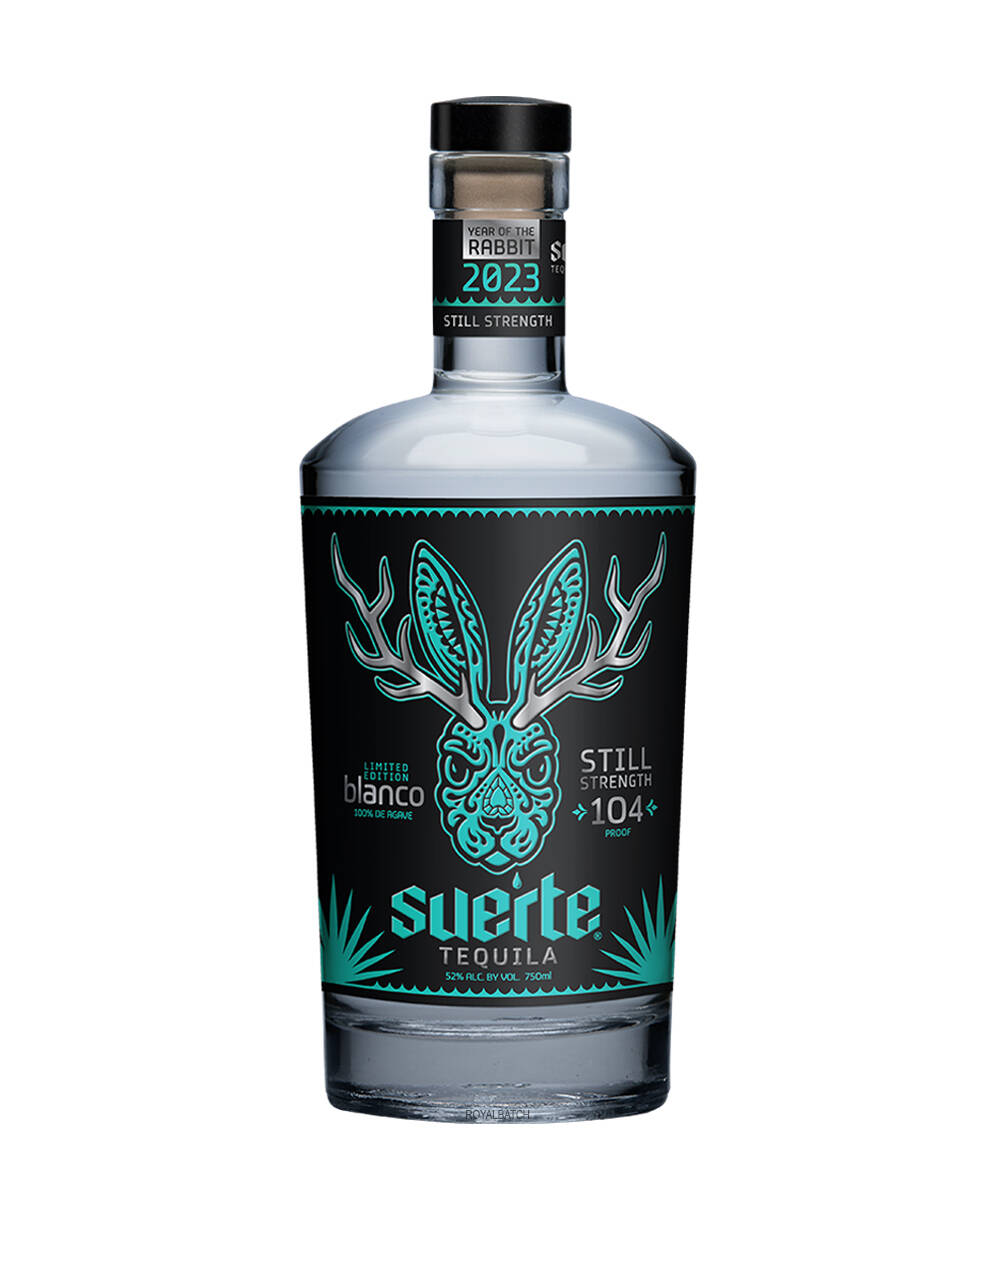 Suerte Still Strength Blanco Tequila Year of the Rabbit 2023